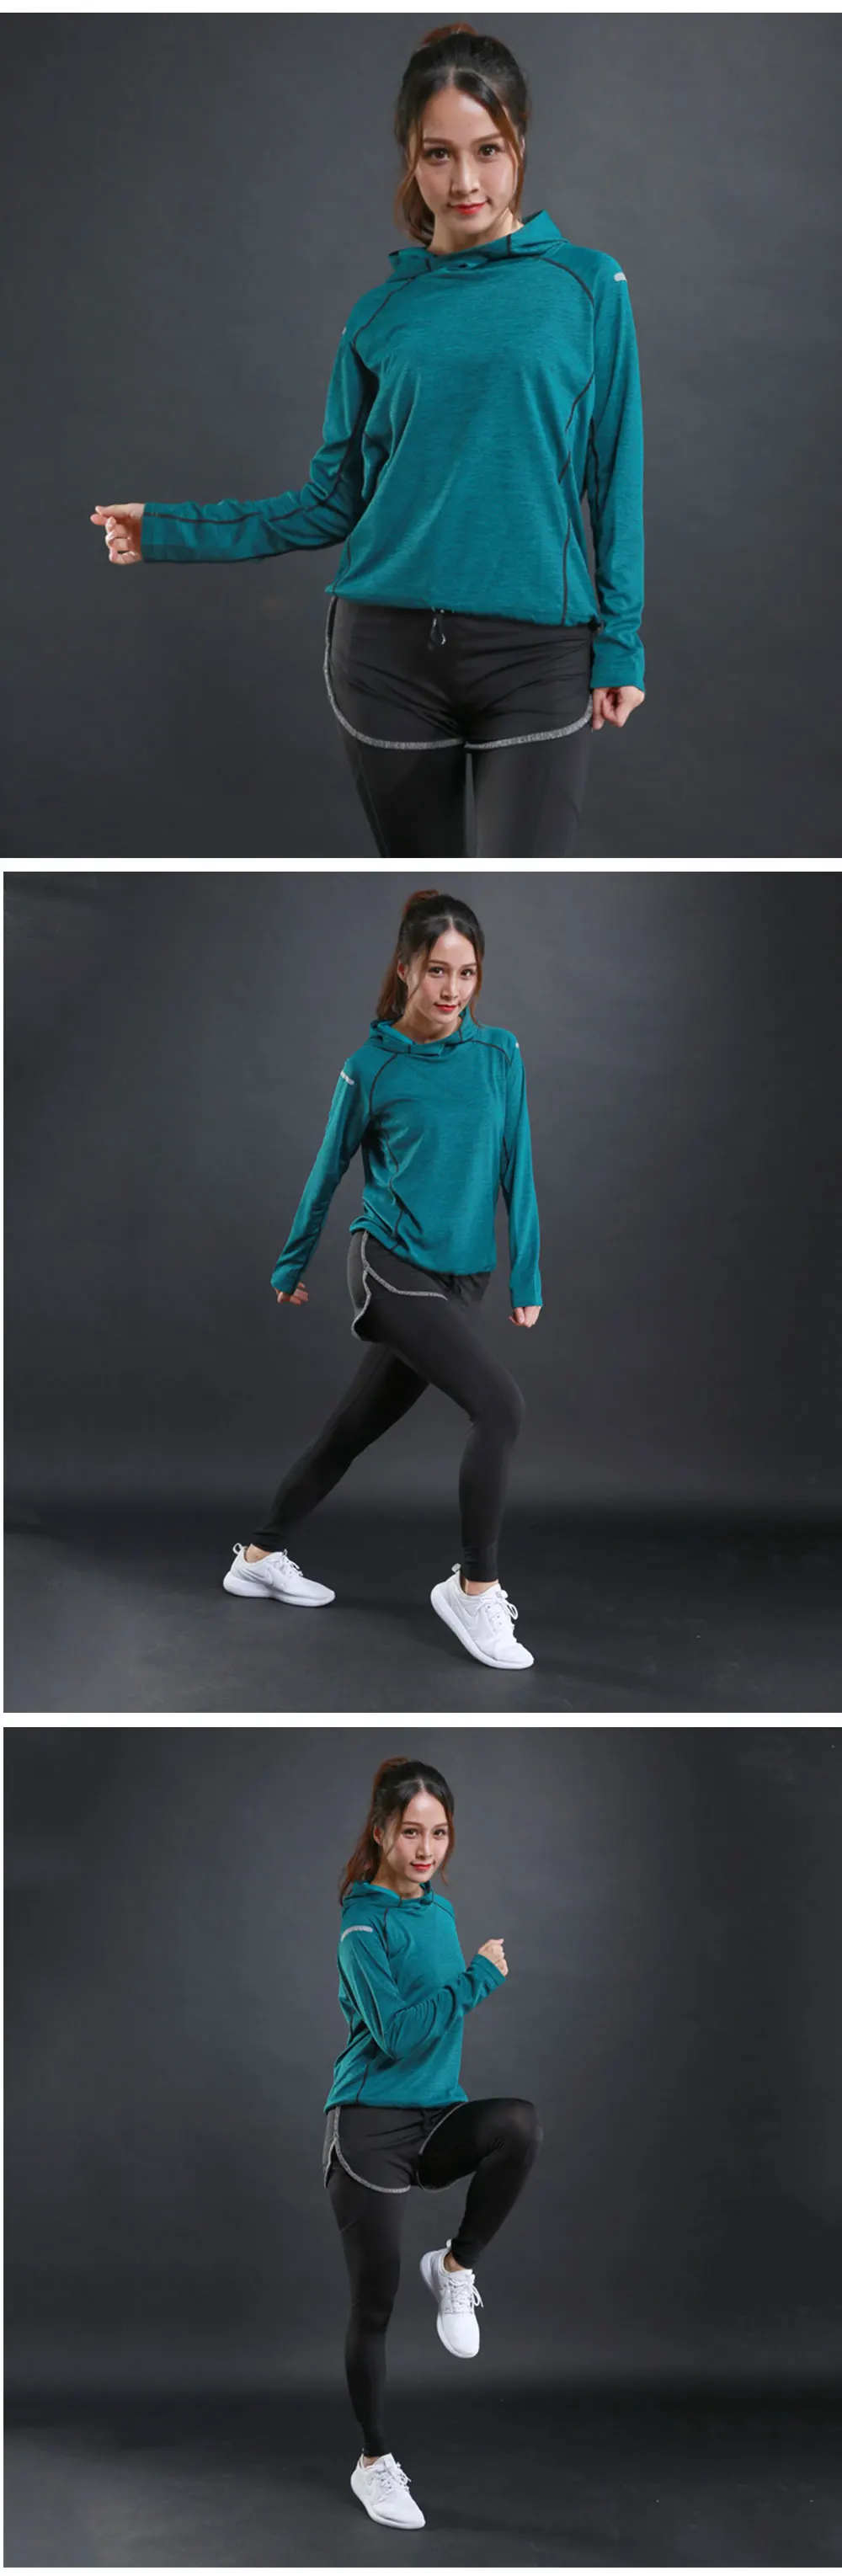 PRYDYC Women Running T Shirts thin Gym fitness Long Sleeves sweatshirts Yoga Clothing Quick Dry Training Breathable Hood Sports